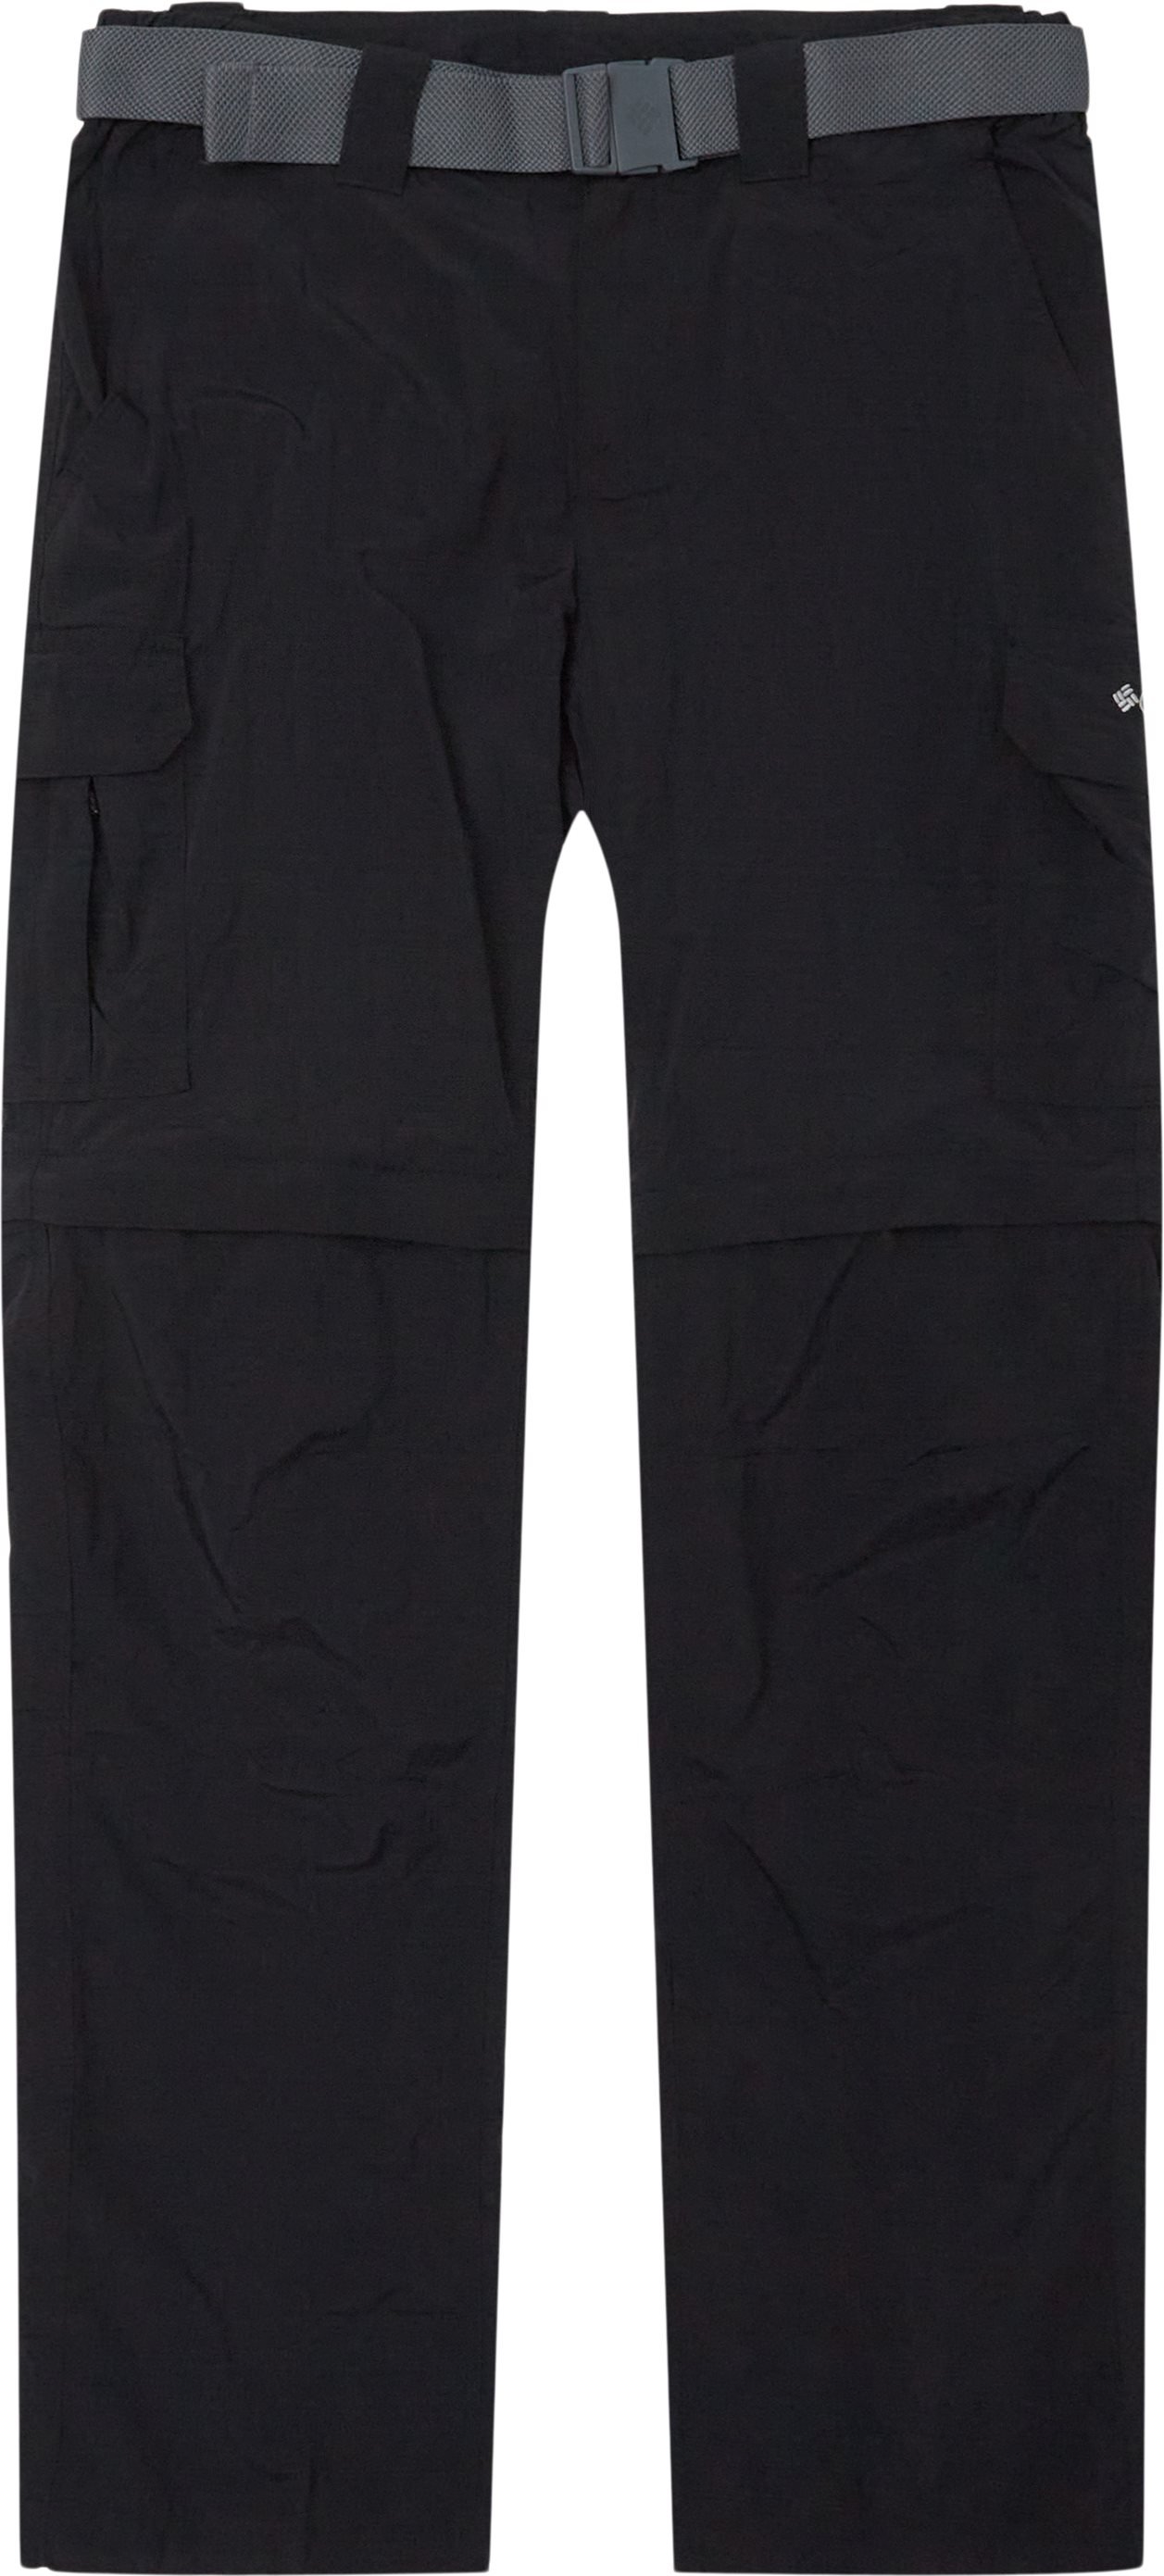 Silver Ridge II Convertible Pant - Trousers - Regular fit - Black